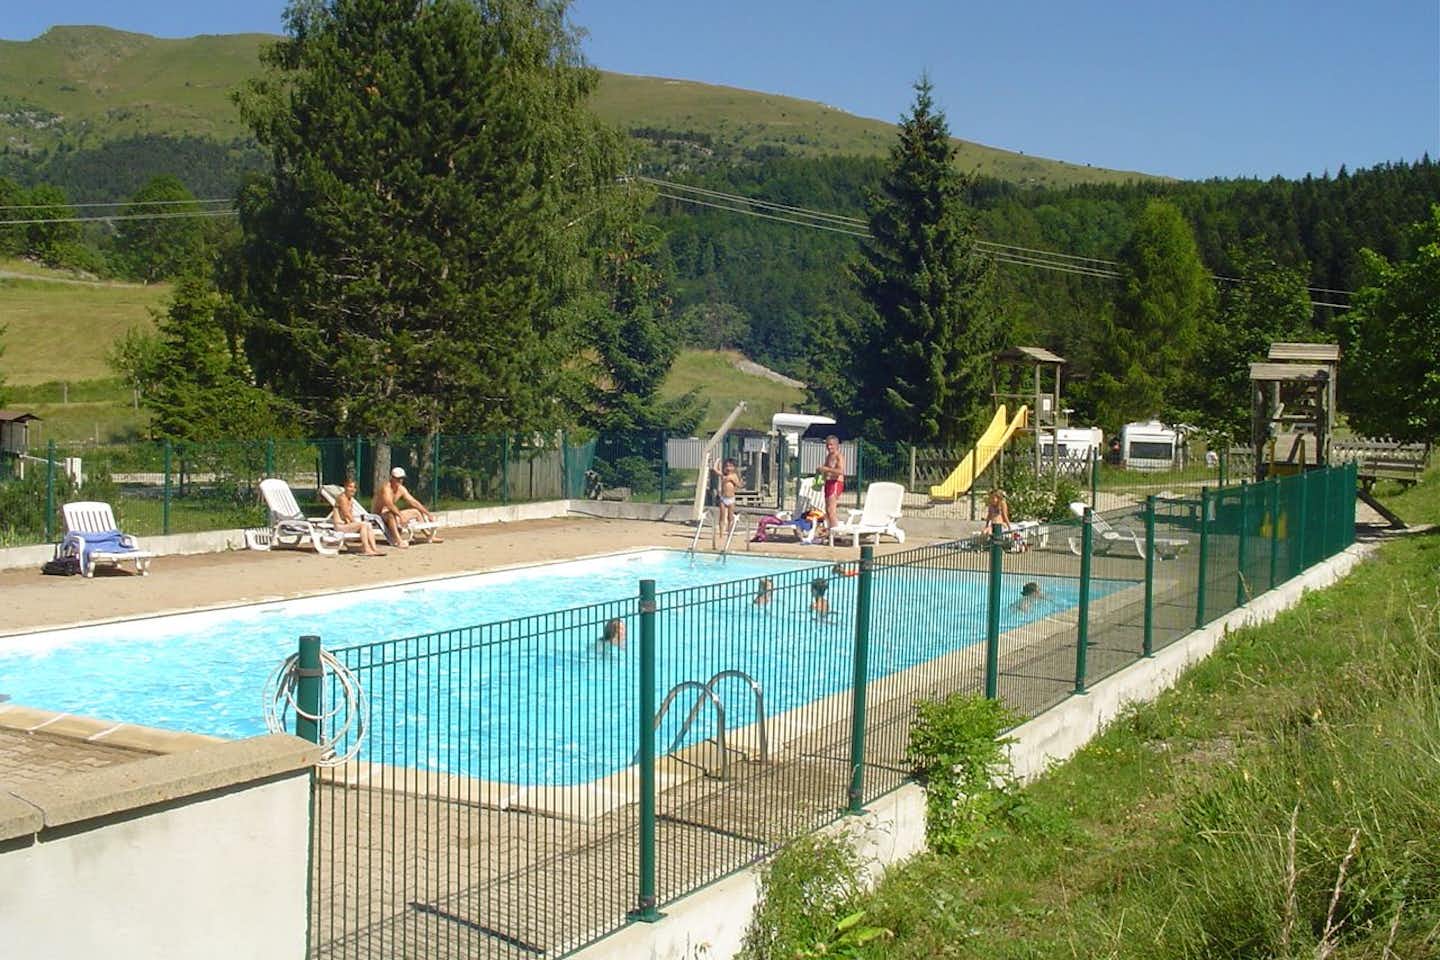 Camping Les 4 Saisons - Swimmingpool mit Kinderspielplatz im Hintergrund